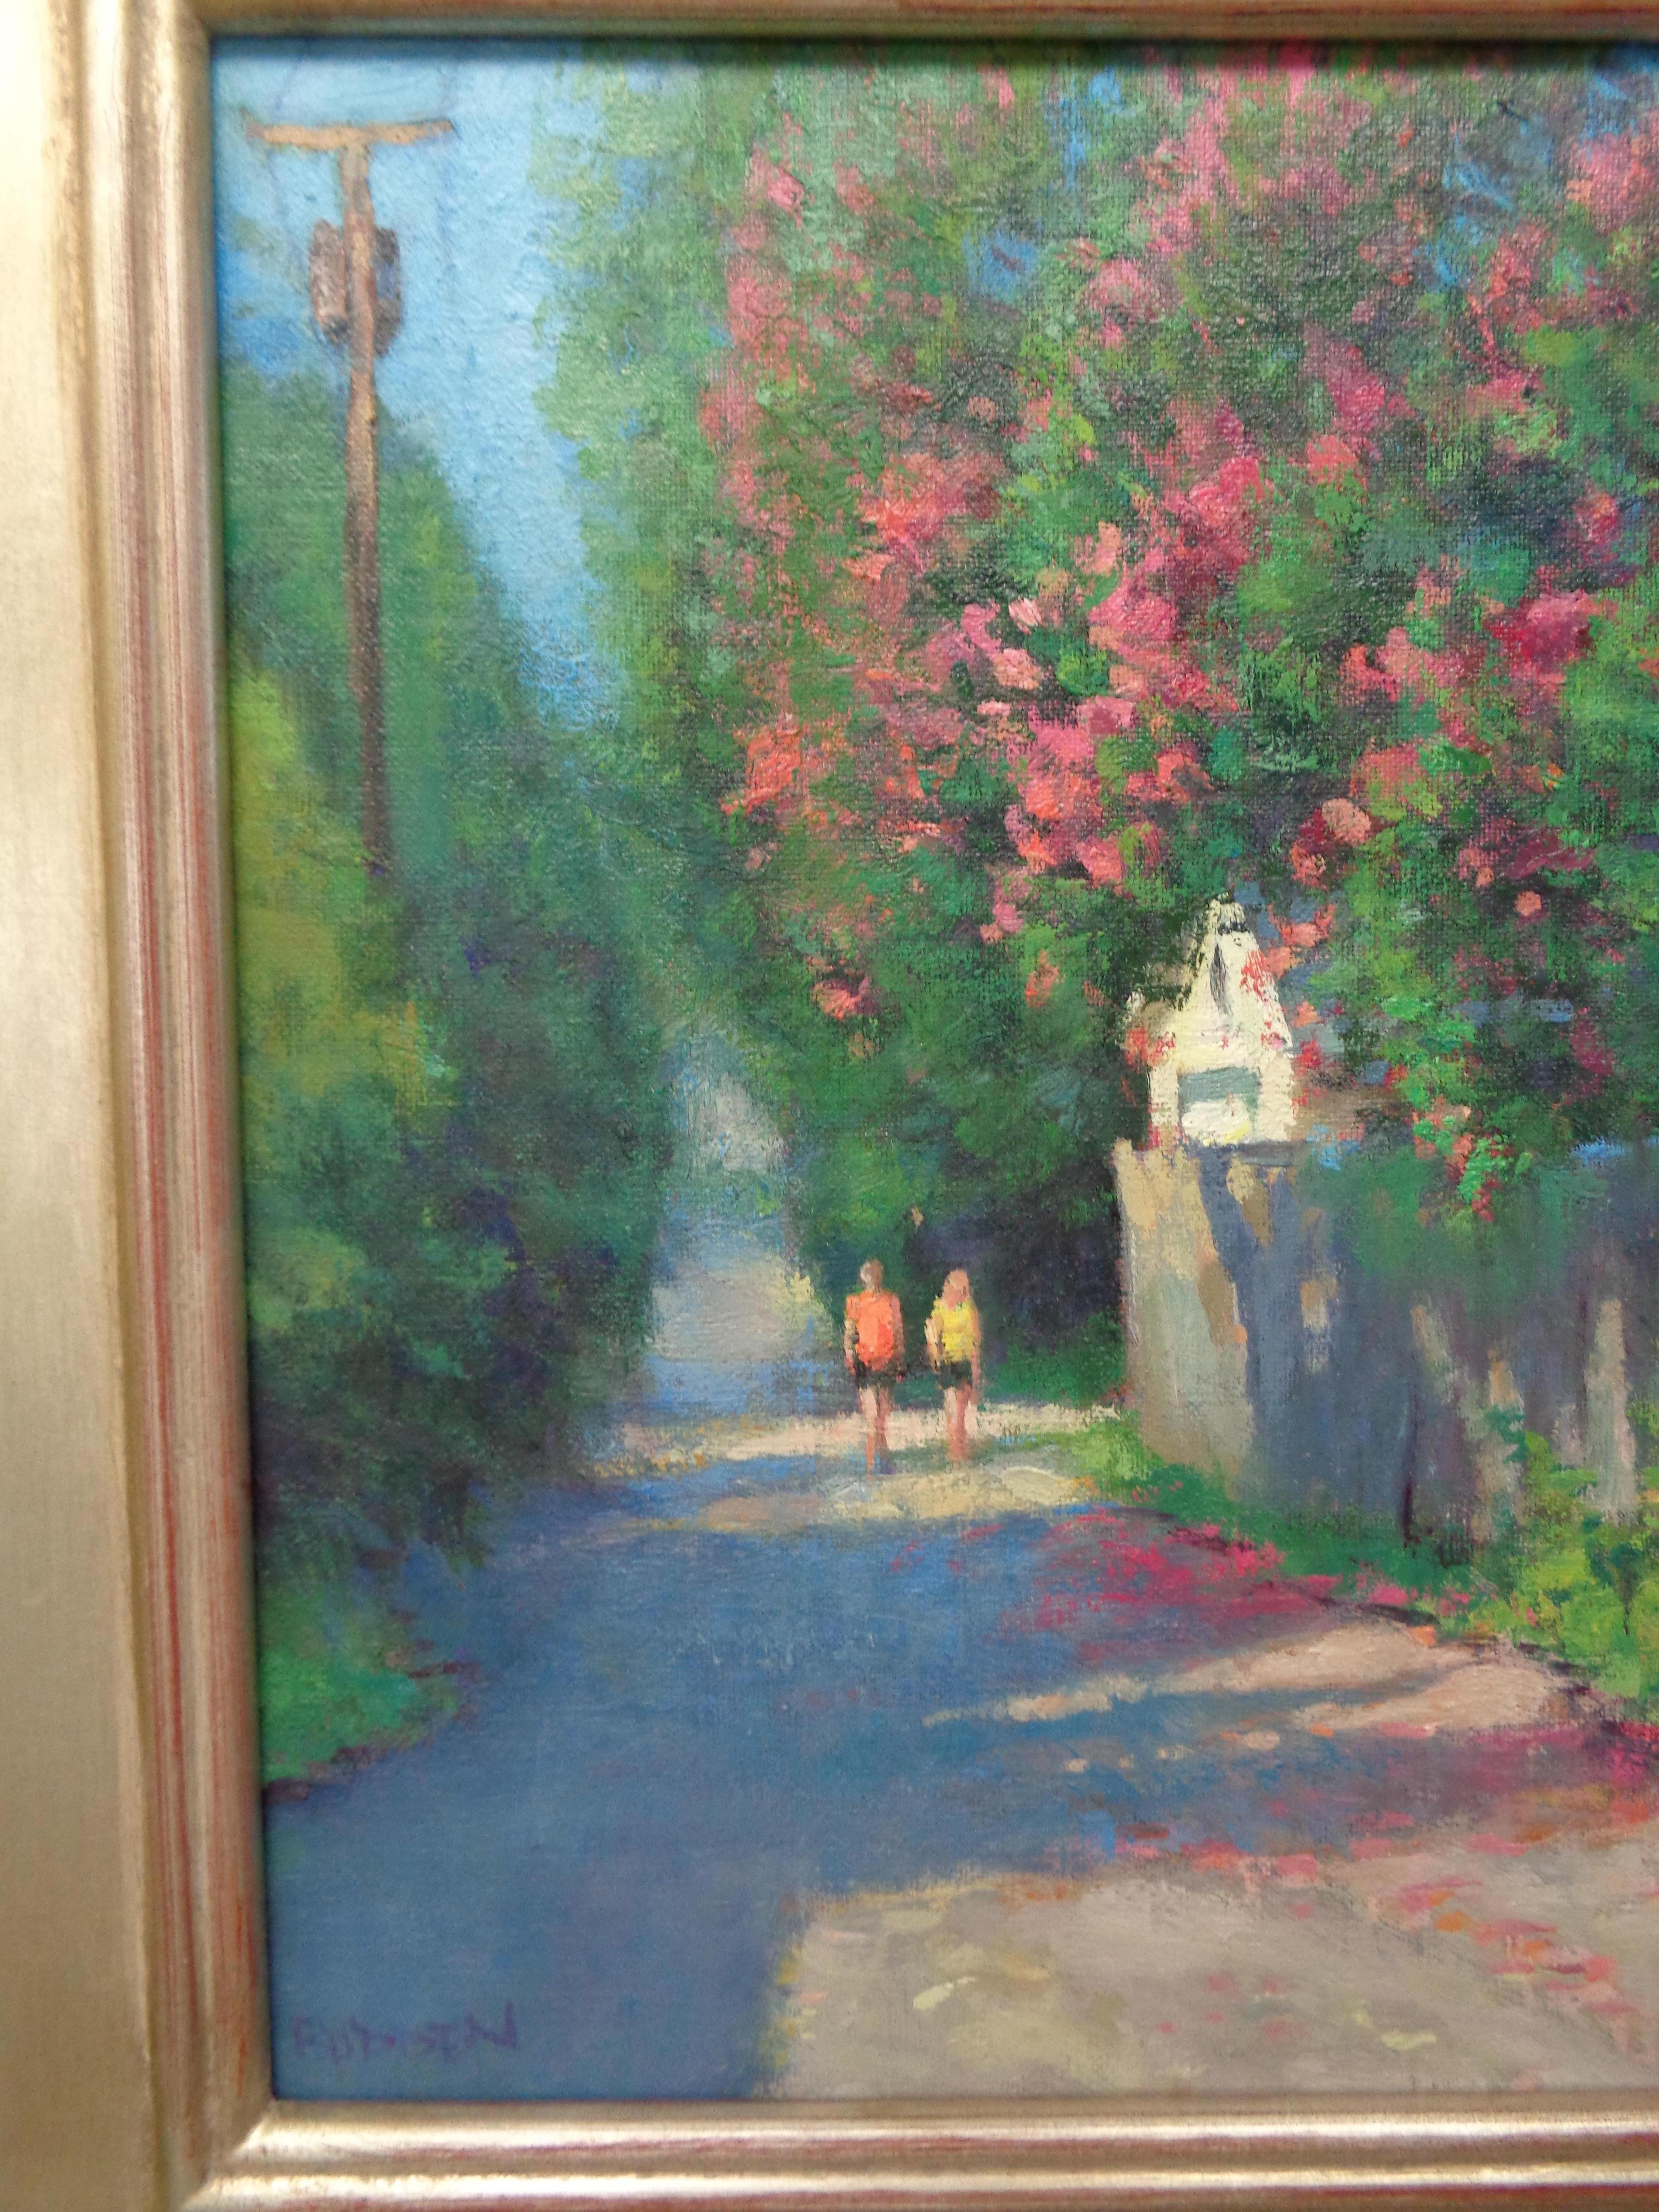  Impressionistic Floral Landscape Painting Michael Budden Alley Walk 1